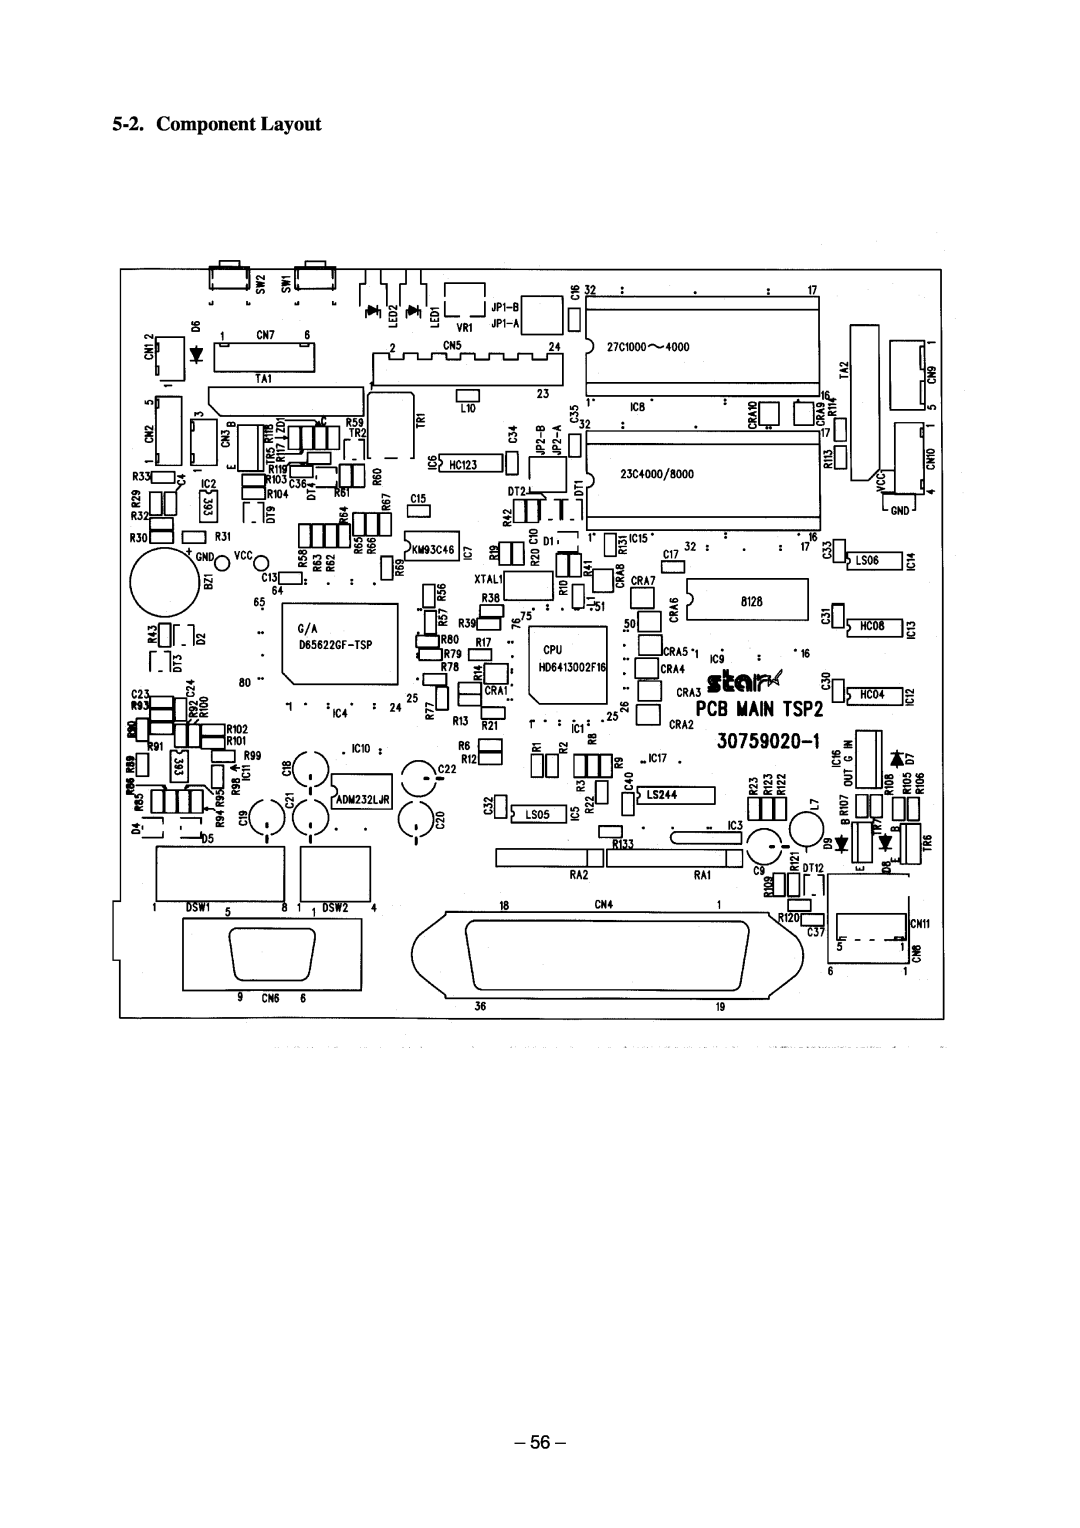 Star Micronics TSP200 technical manual Component Layout 